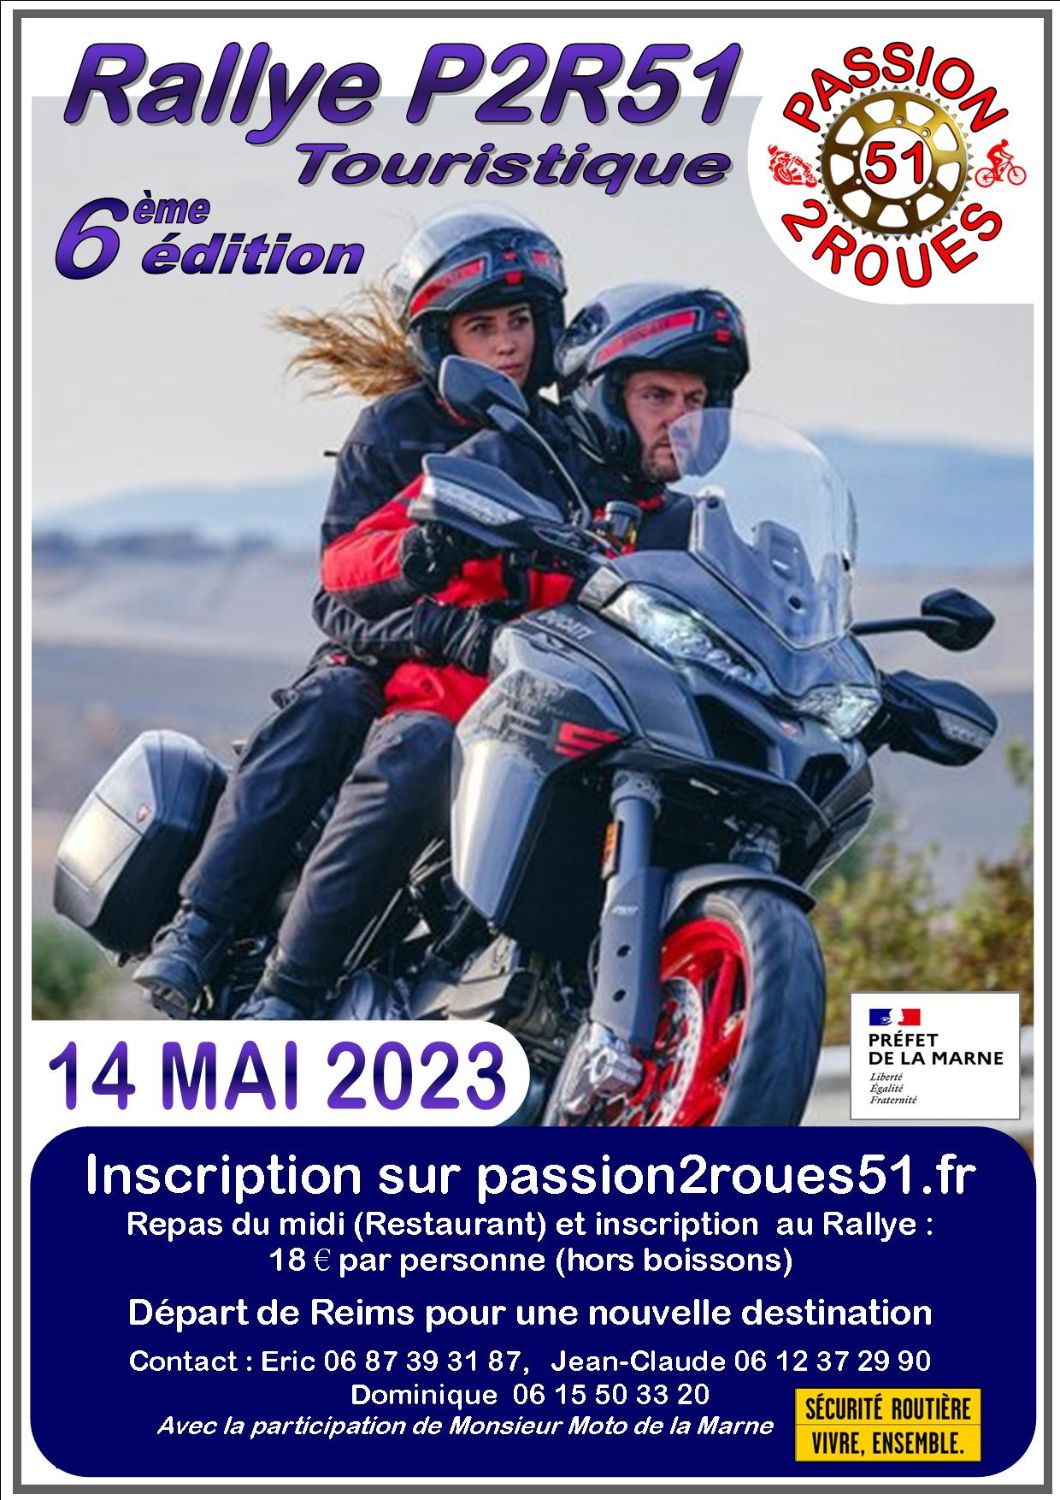 Rallye Passion 2 Roues 51 du 14 mai 2023